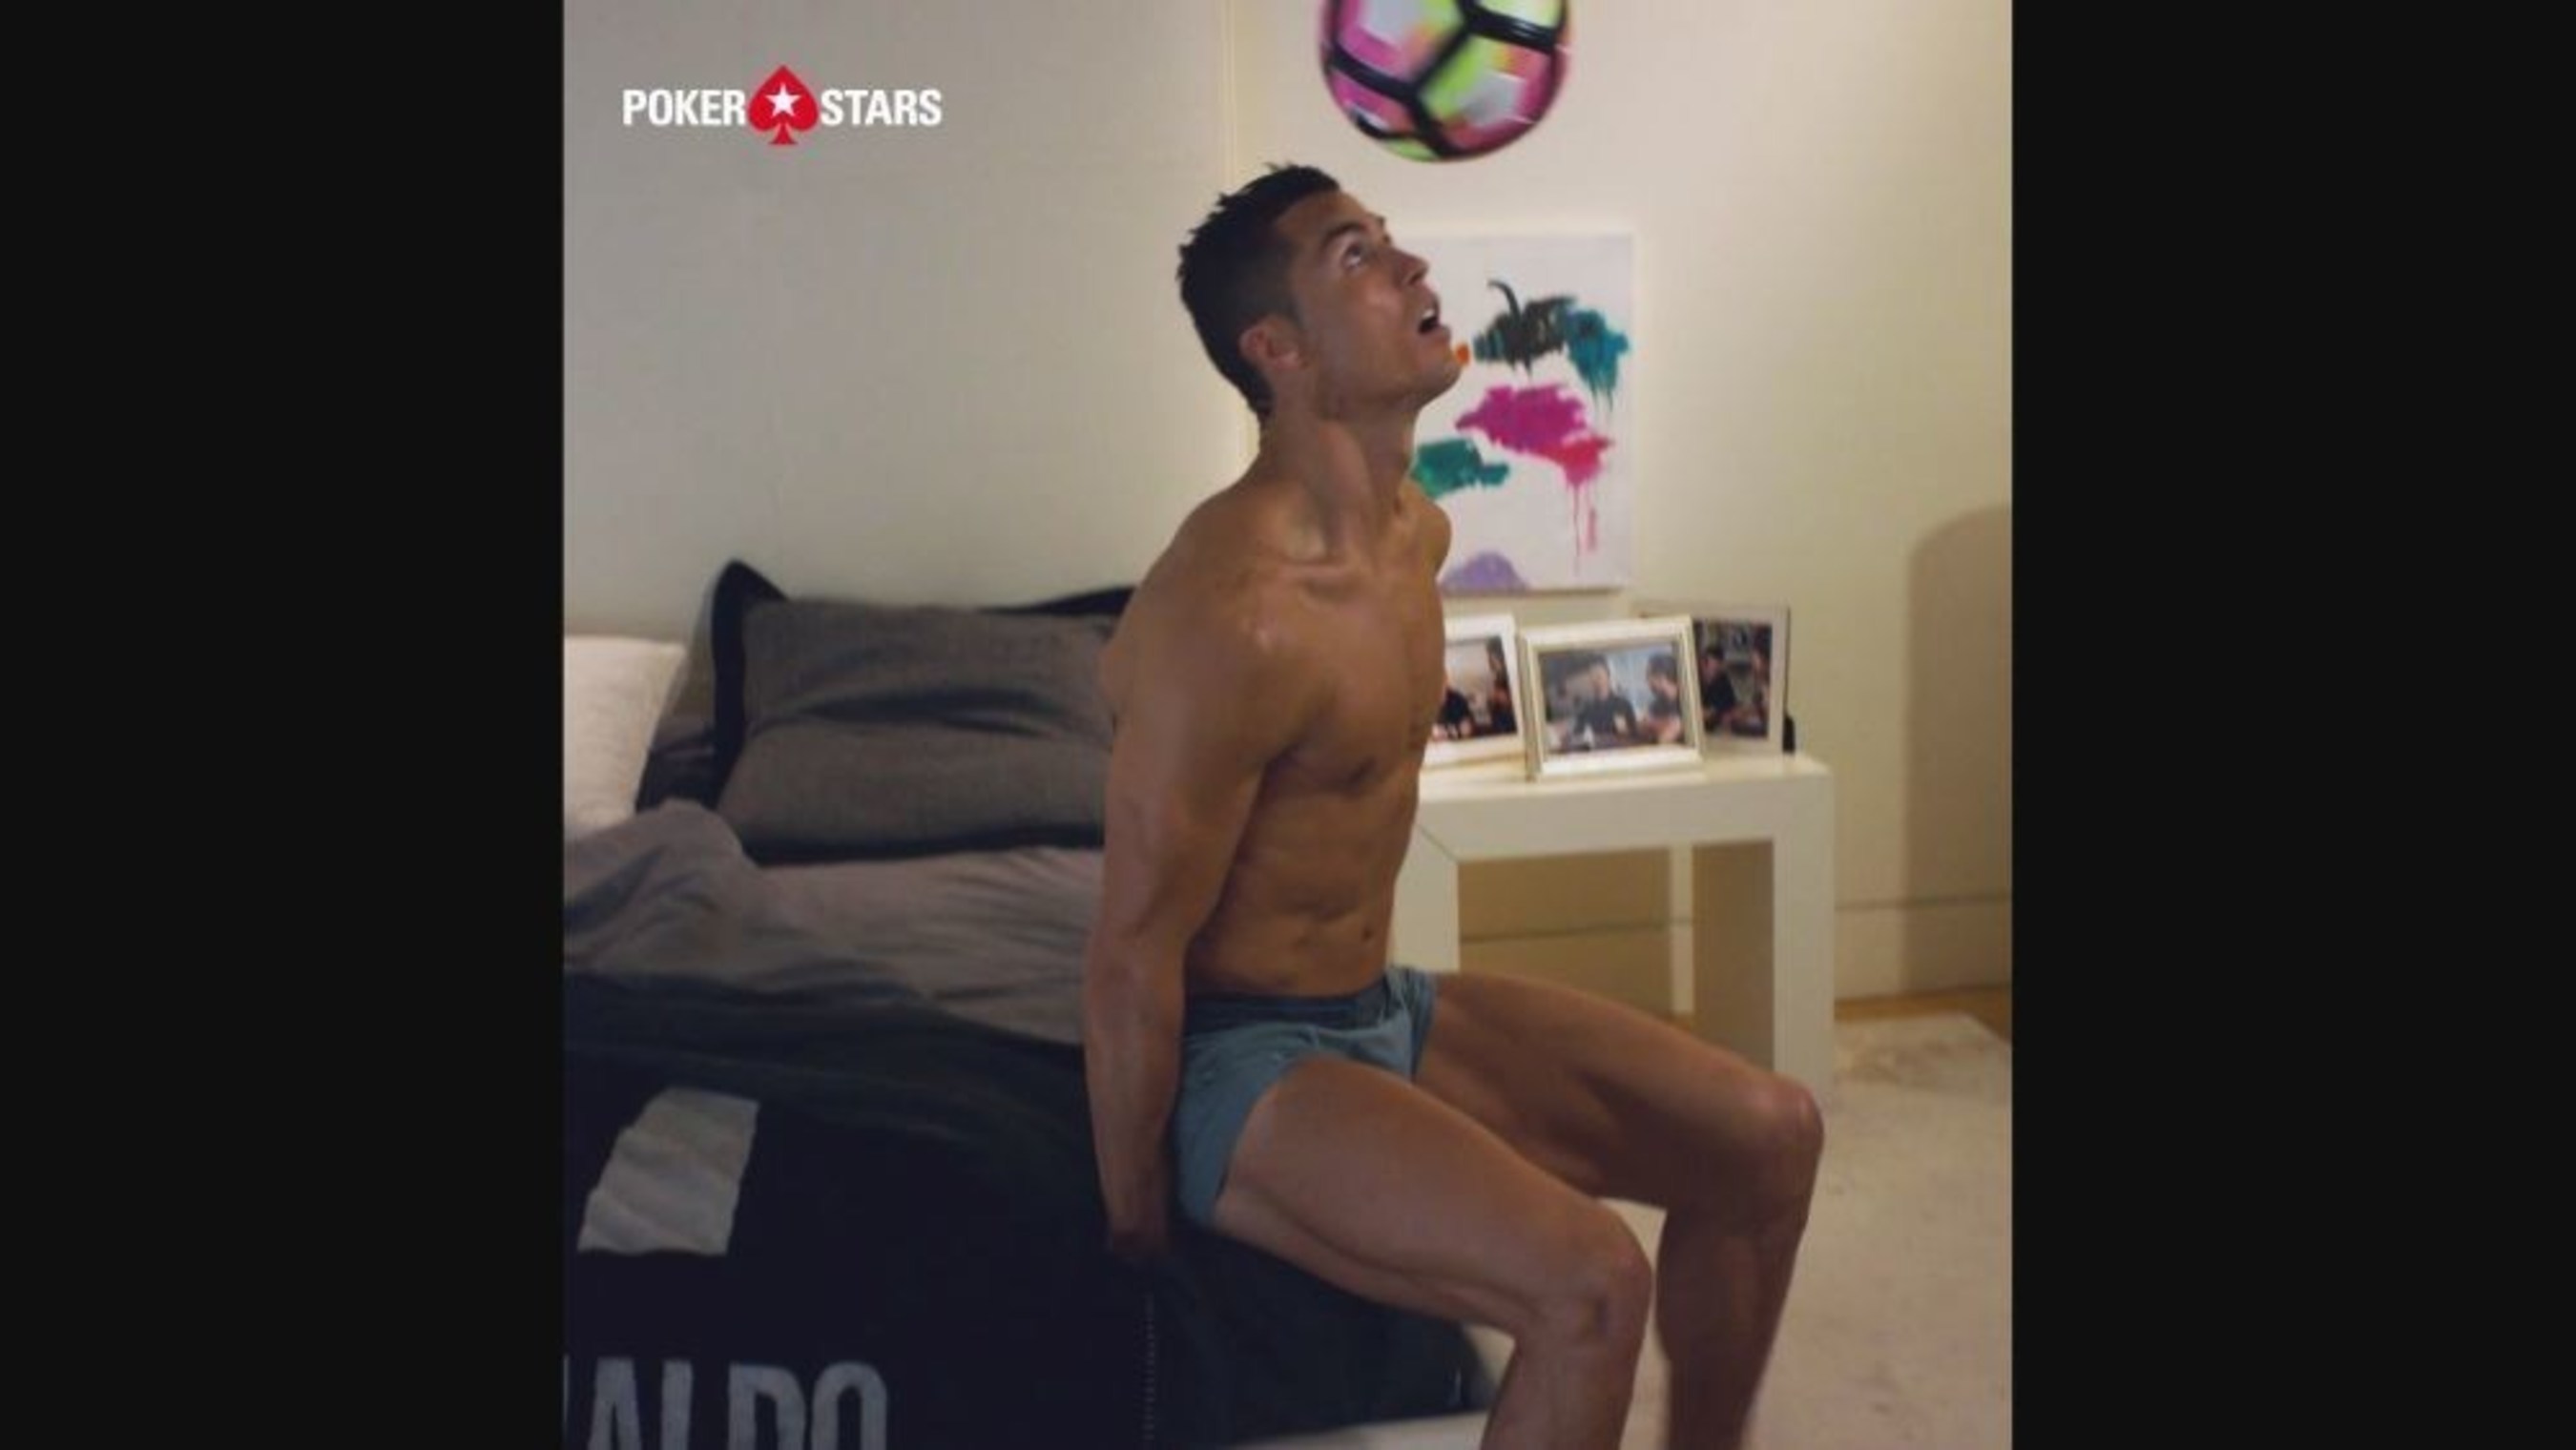 Team PokerStars SportsStar Cristiano Ronaldo shows off his skills in the #raiseit challenge (PRNewsFoto/PokerStars)